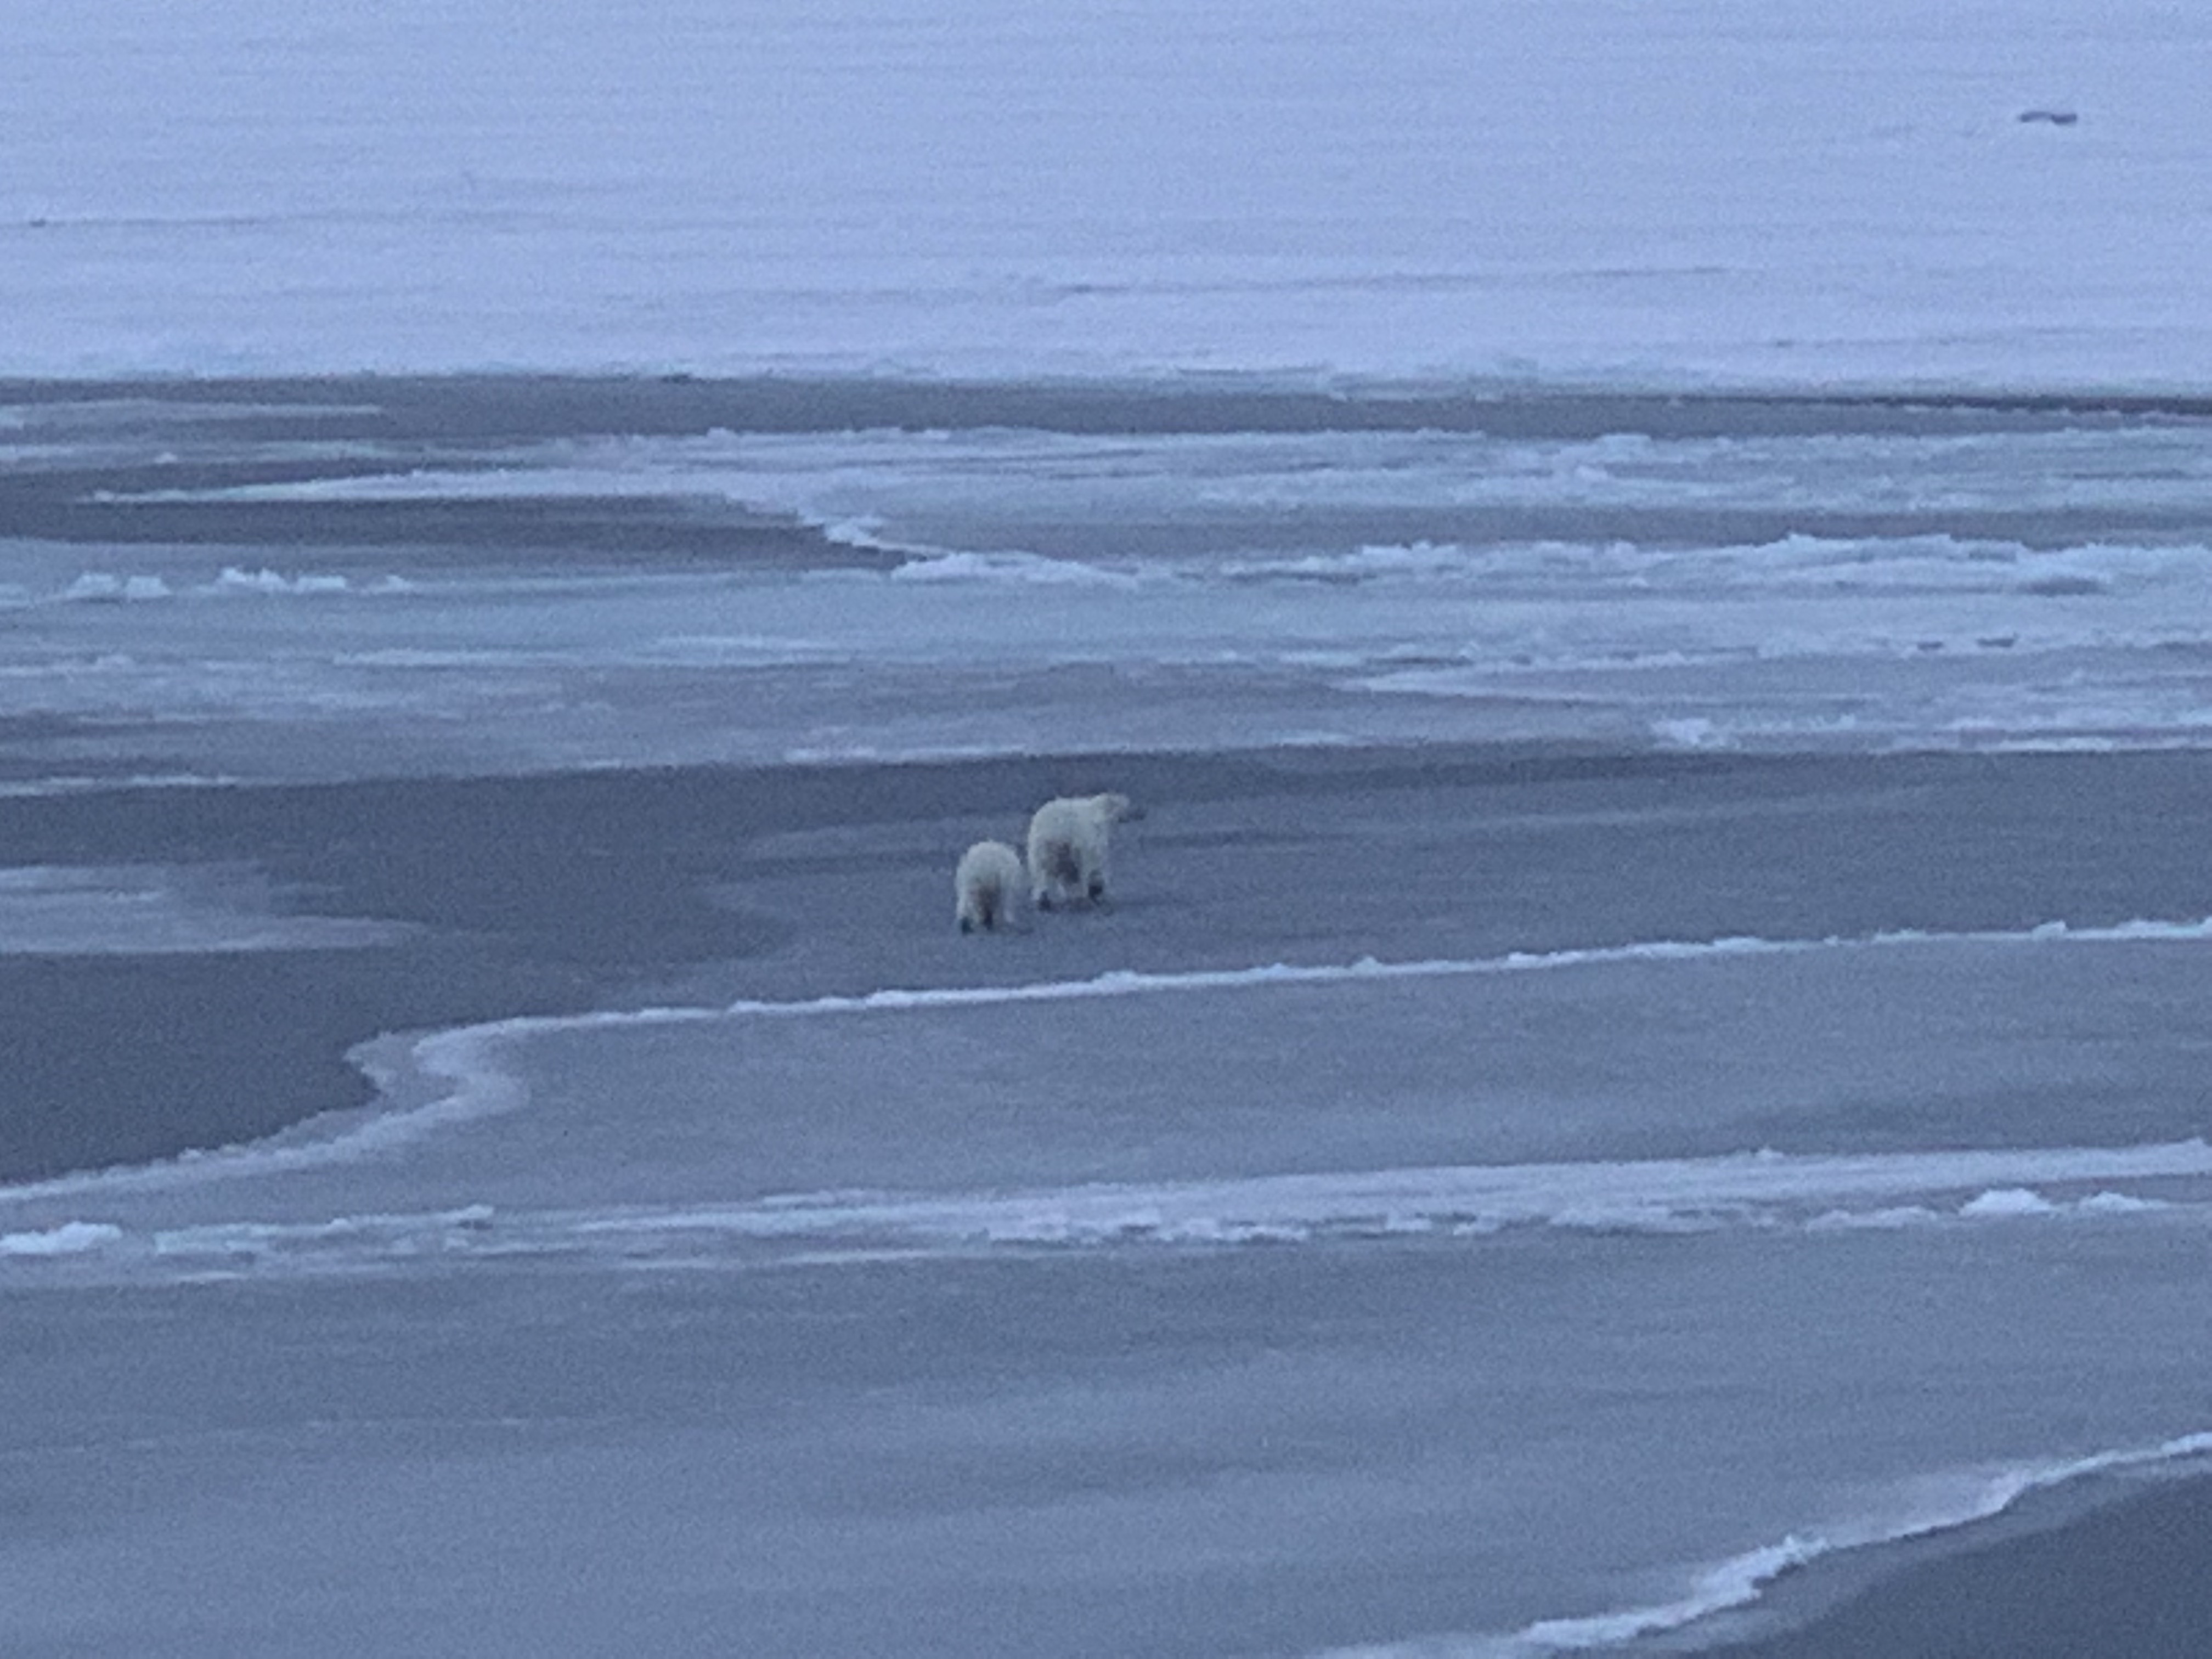 Sea ice photo and polar bears from the Fedorov